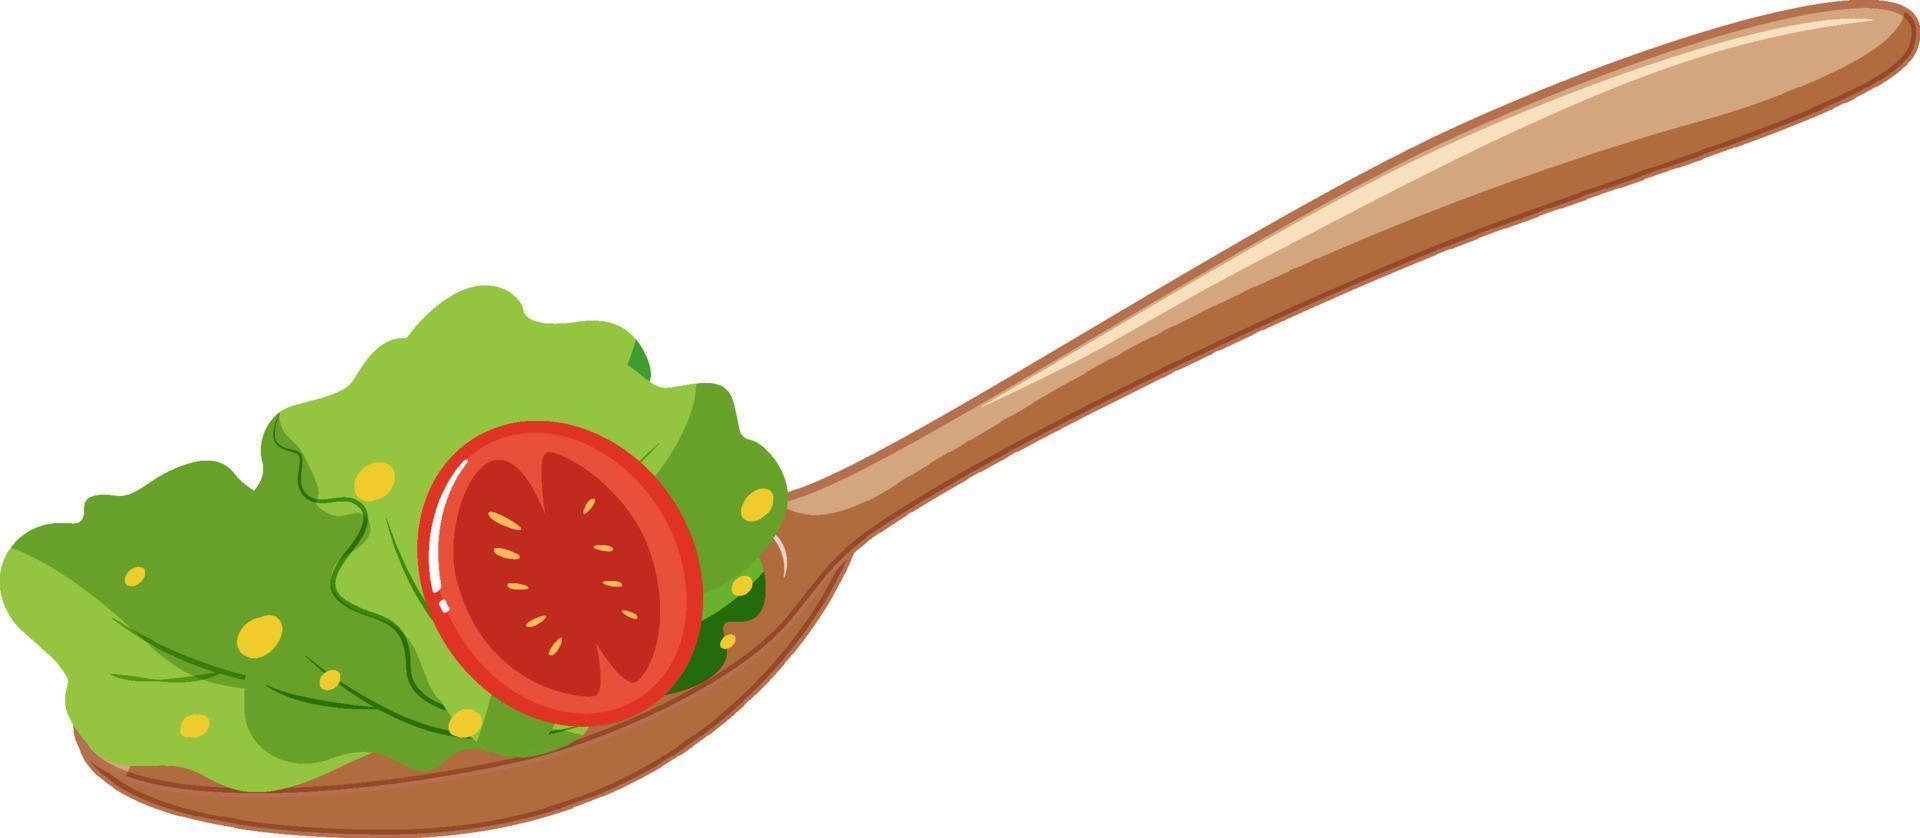 Vegetable salad in a spoon vector